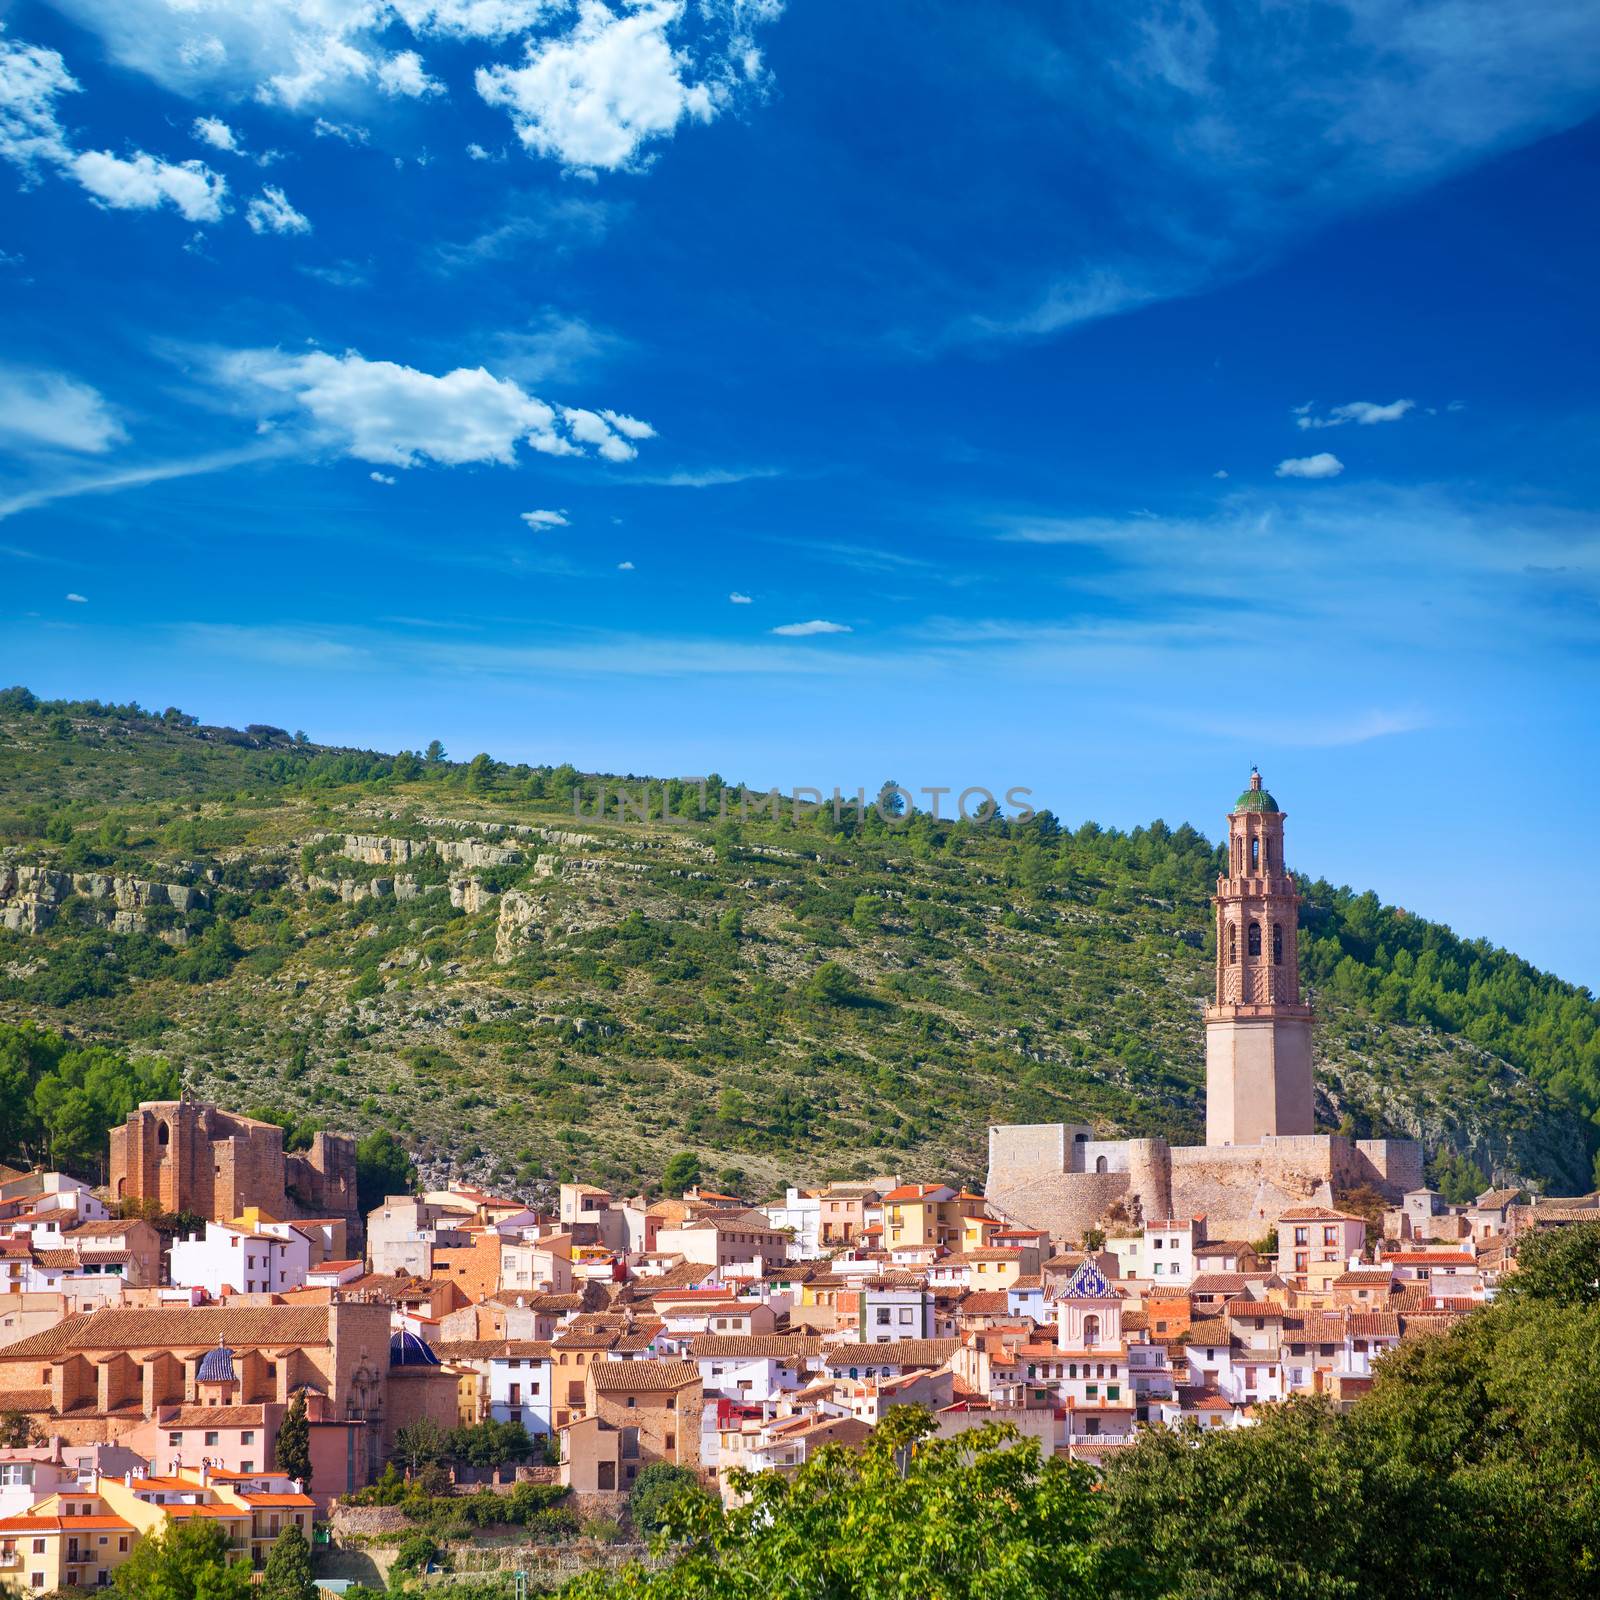 Jerica Castellon village skyline in Alto Palancia of Spain by lunamarina